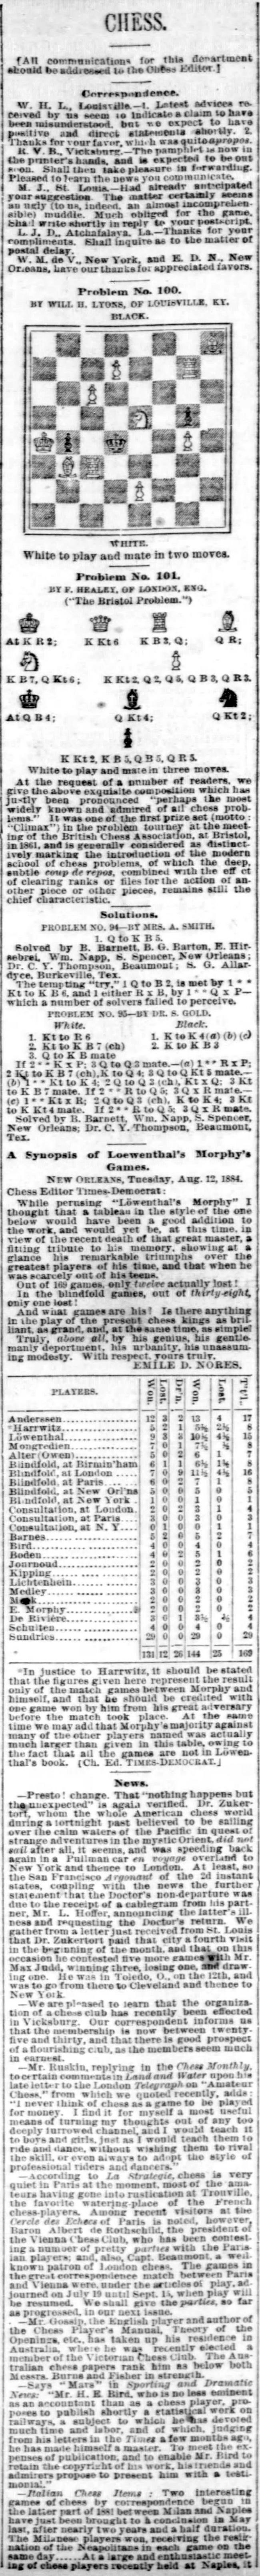 1884.08.17-01 New Orleans Times-Democrat.jpg